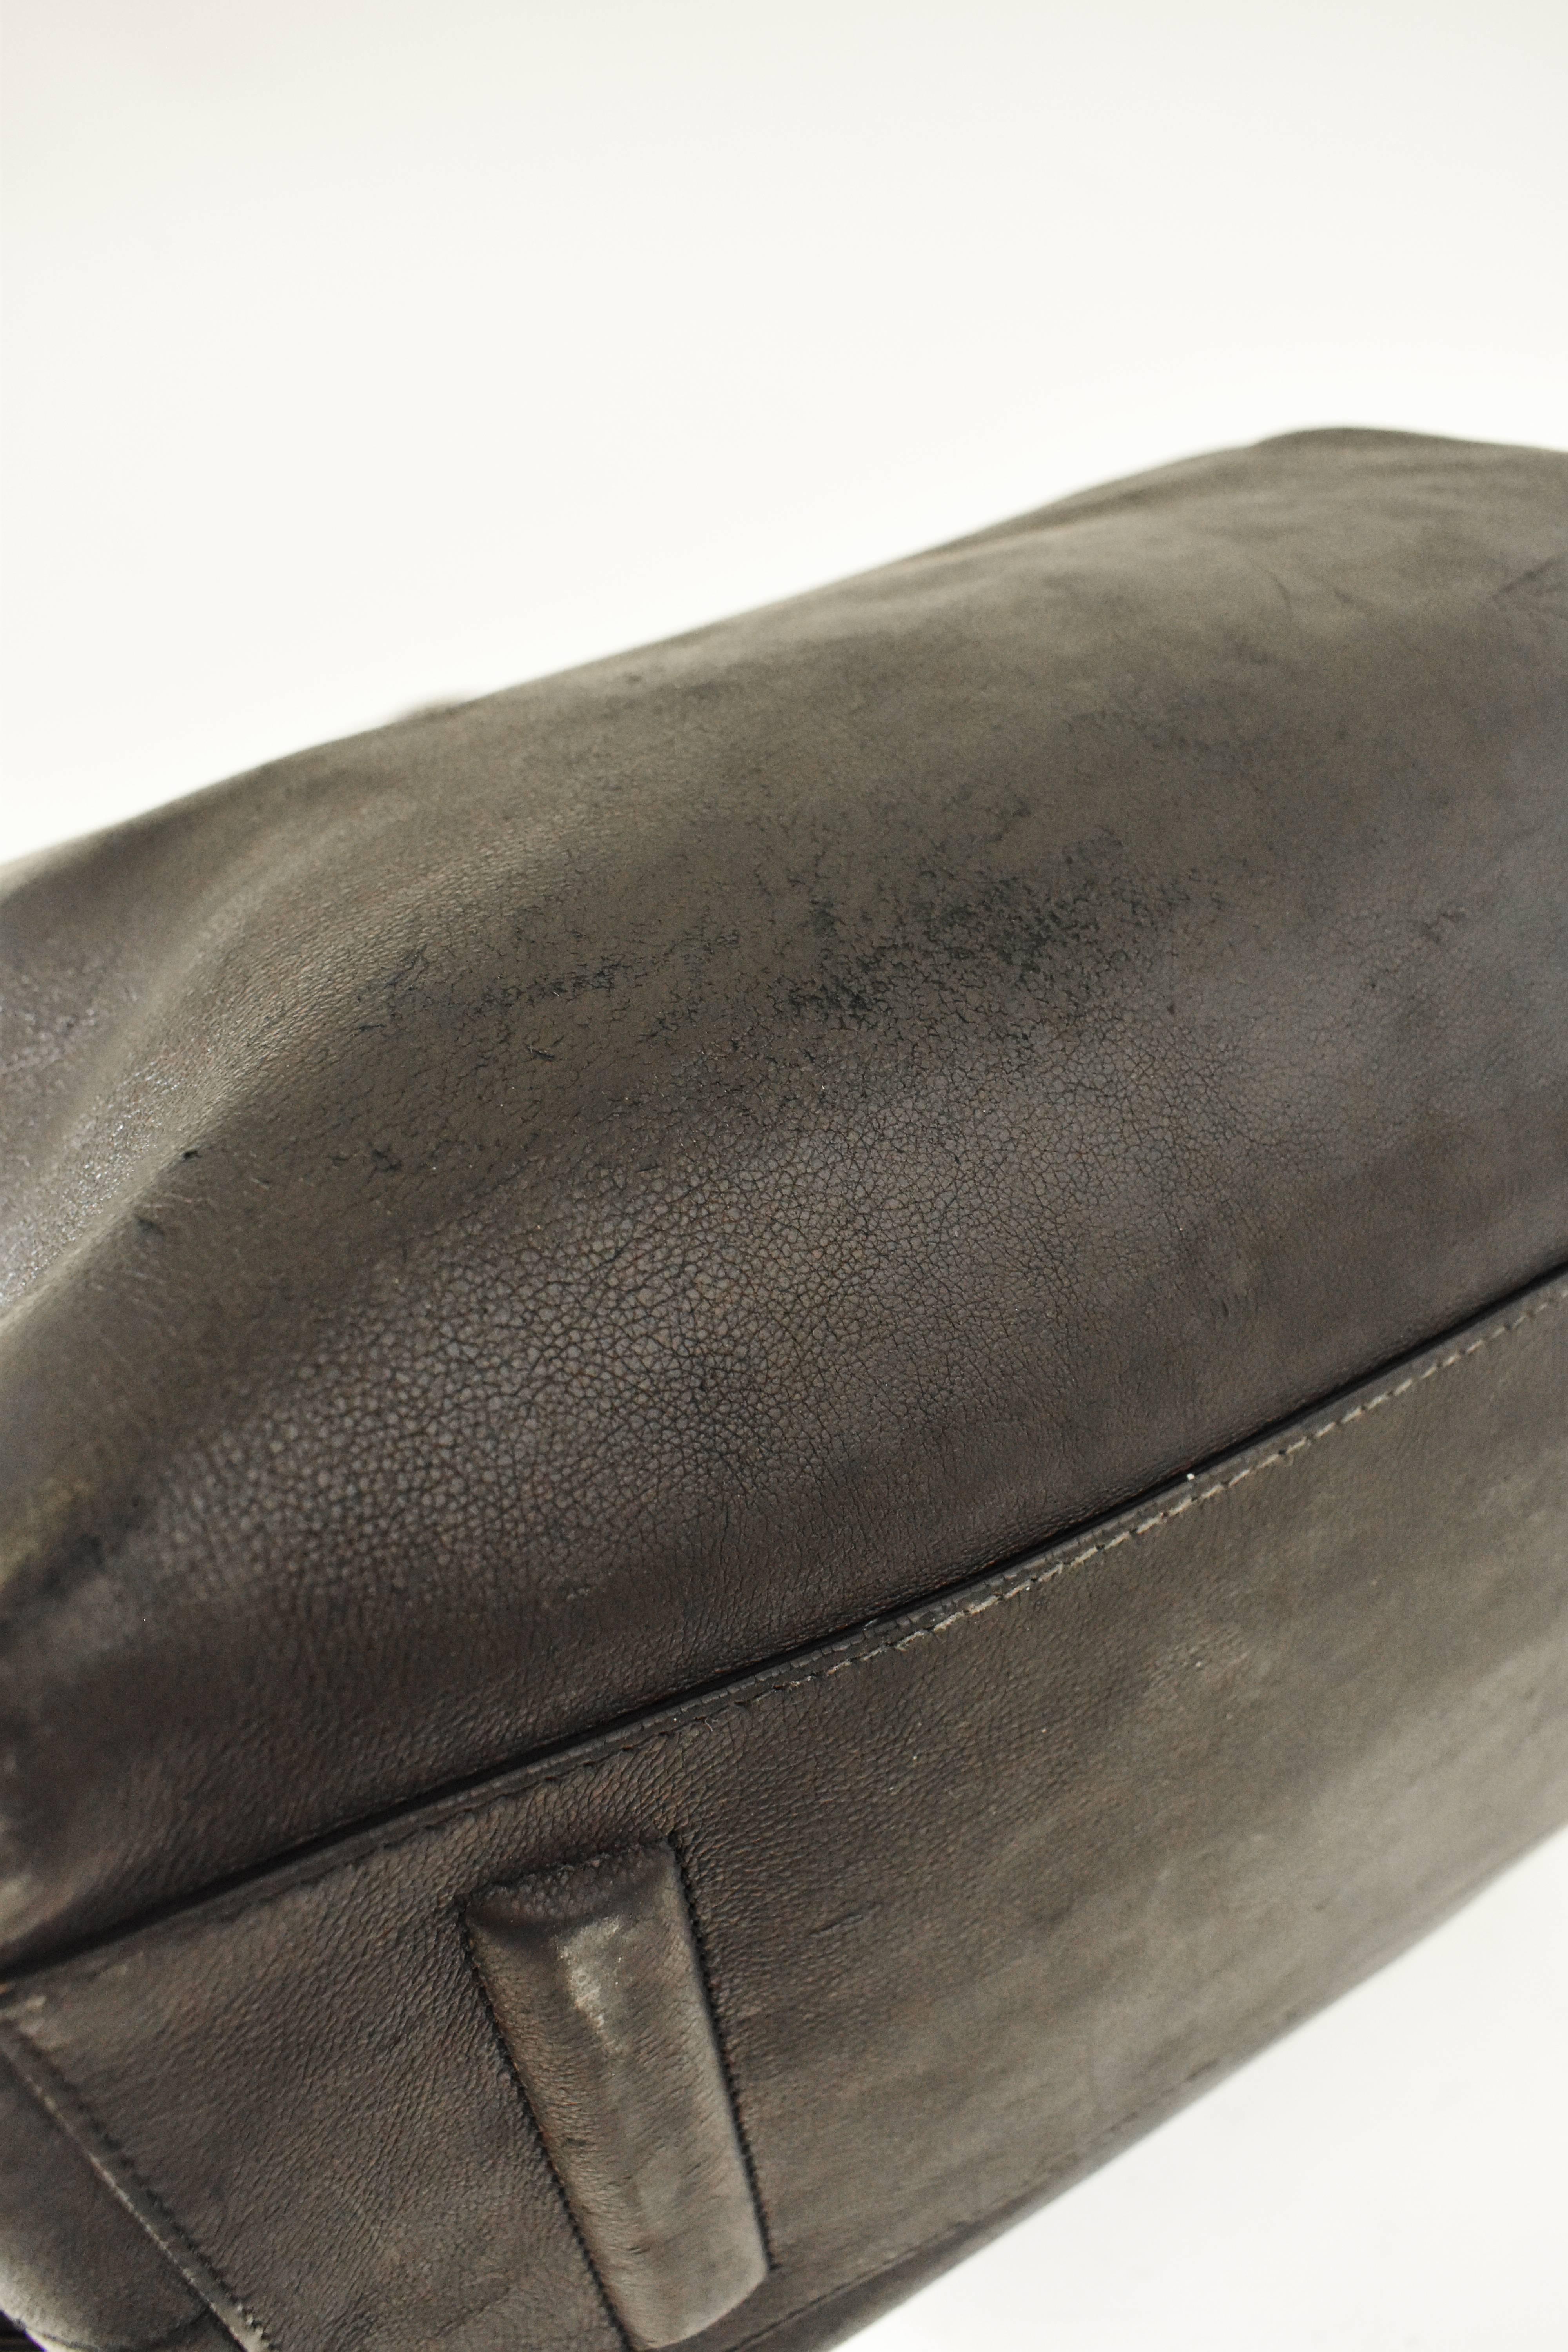 Givenchy Antigona Black Leather Handbag 2